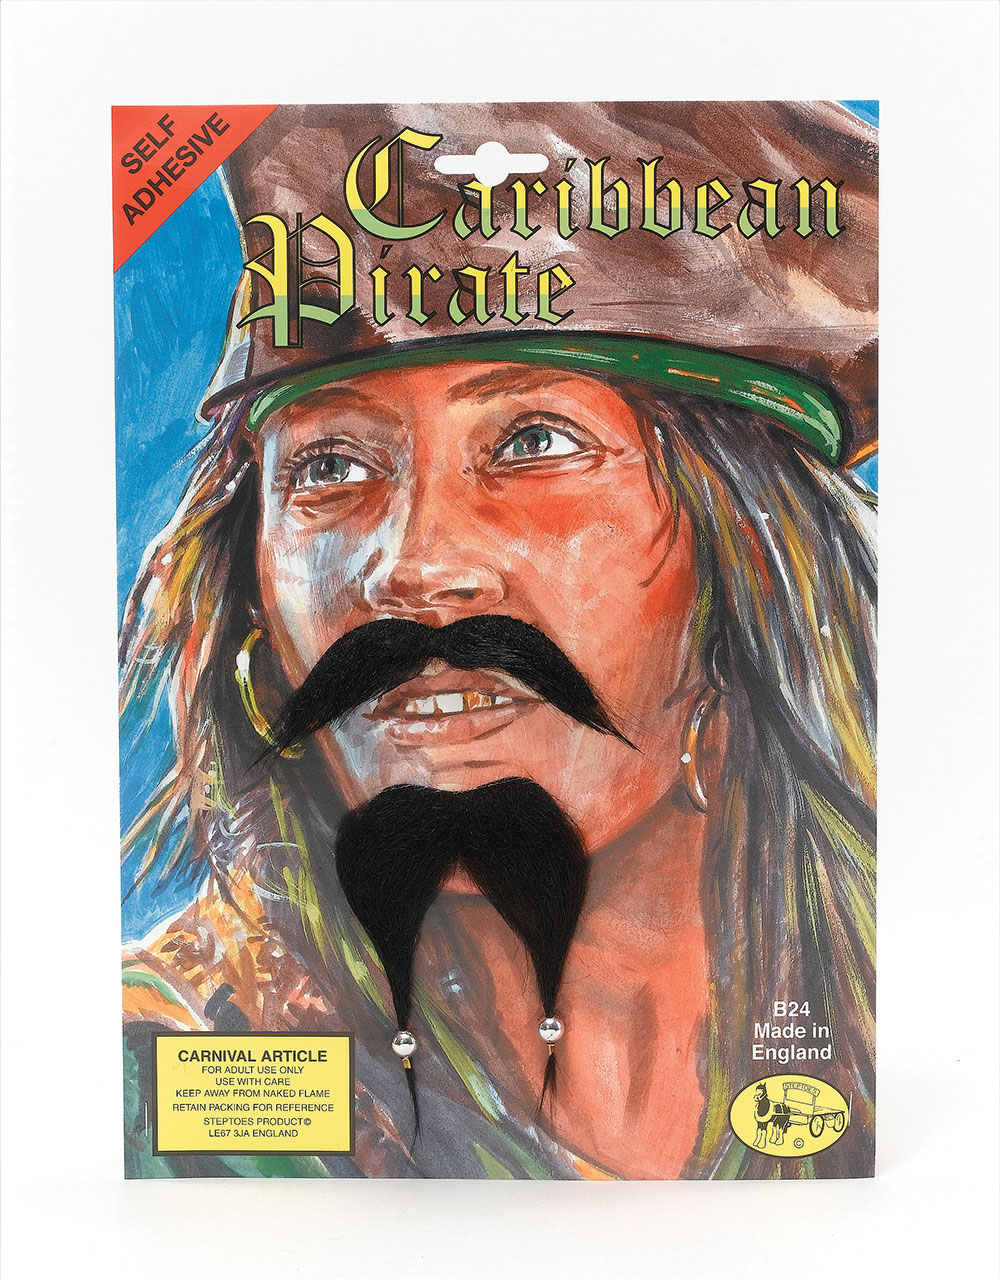 Caribbean Pirate Beard & Tash